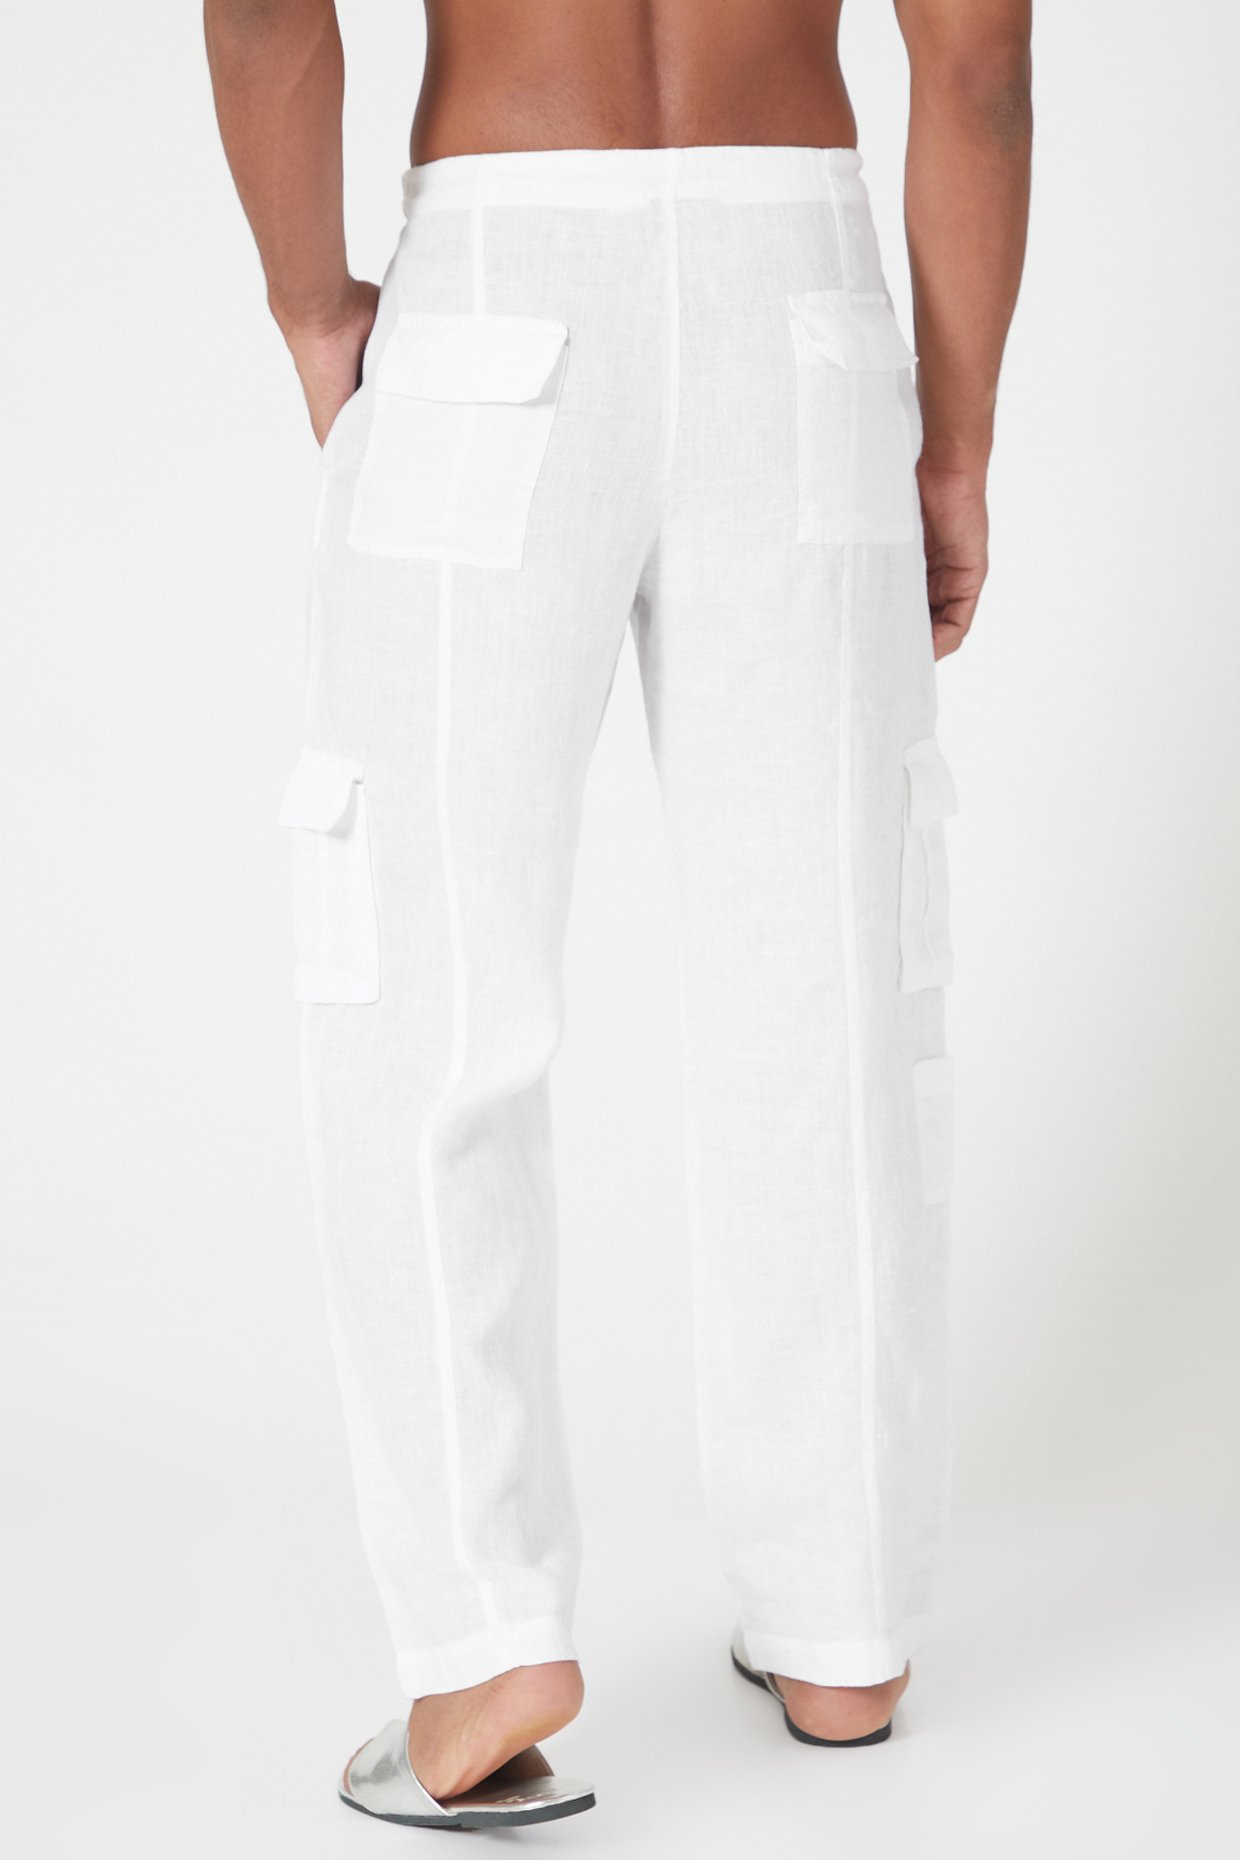 Nylon Cargo Pants - Natural white - Men | H&M US